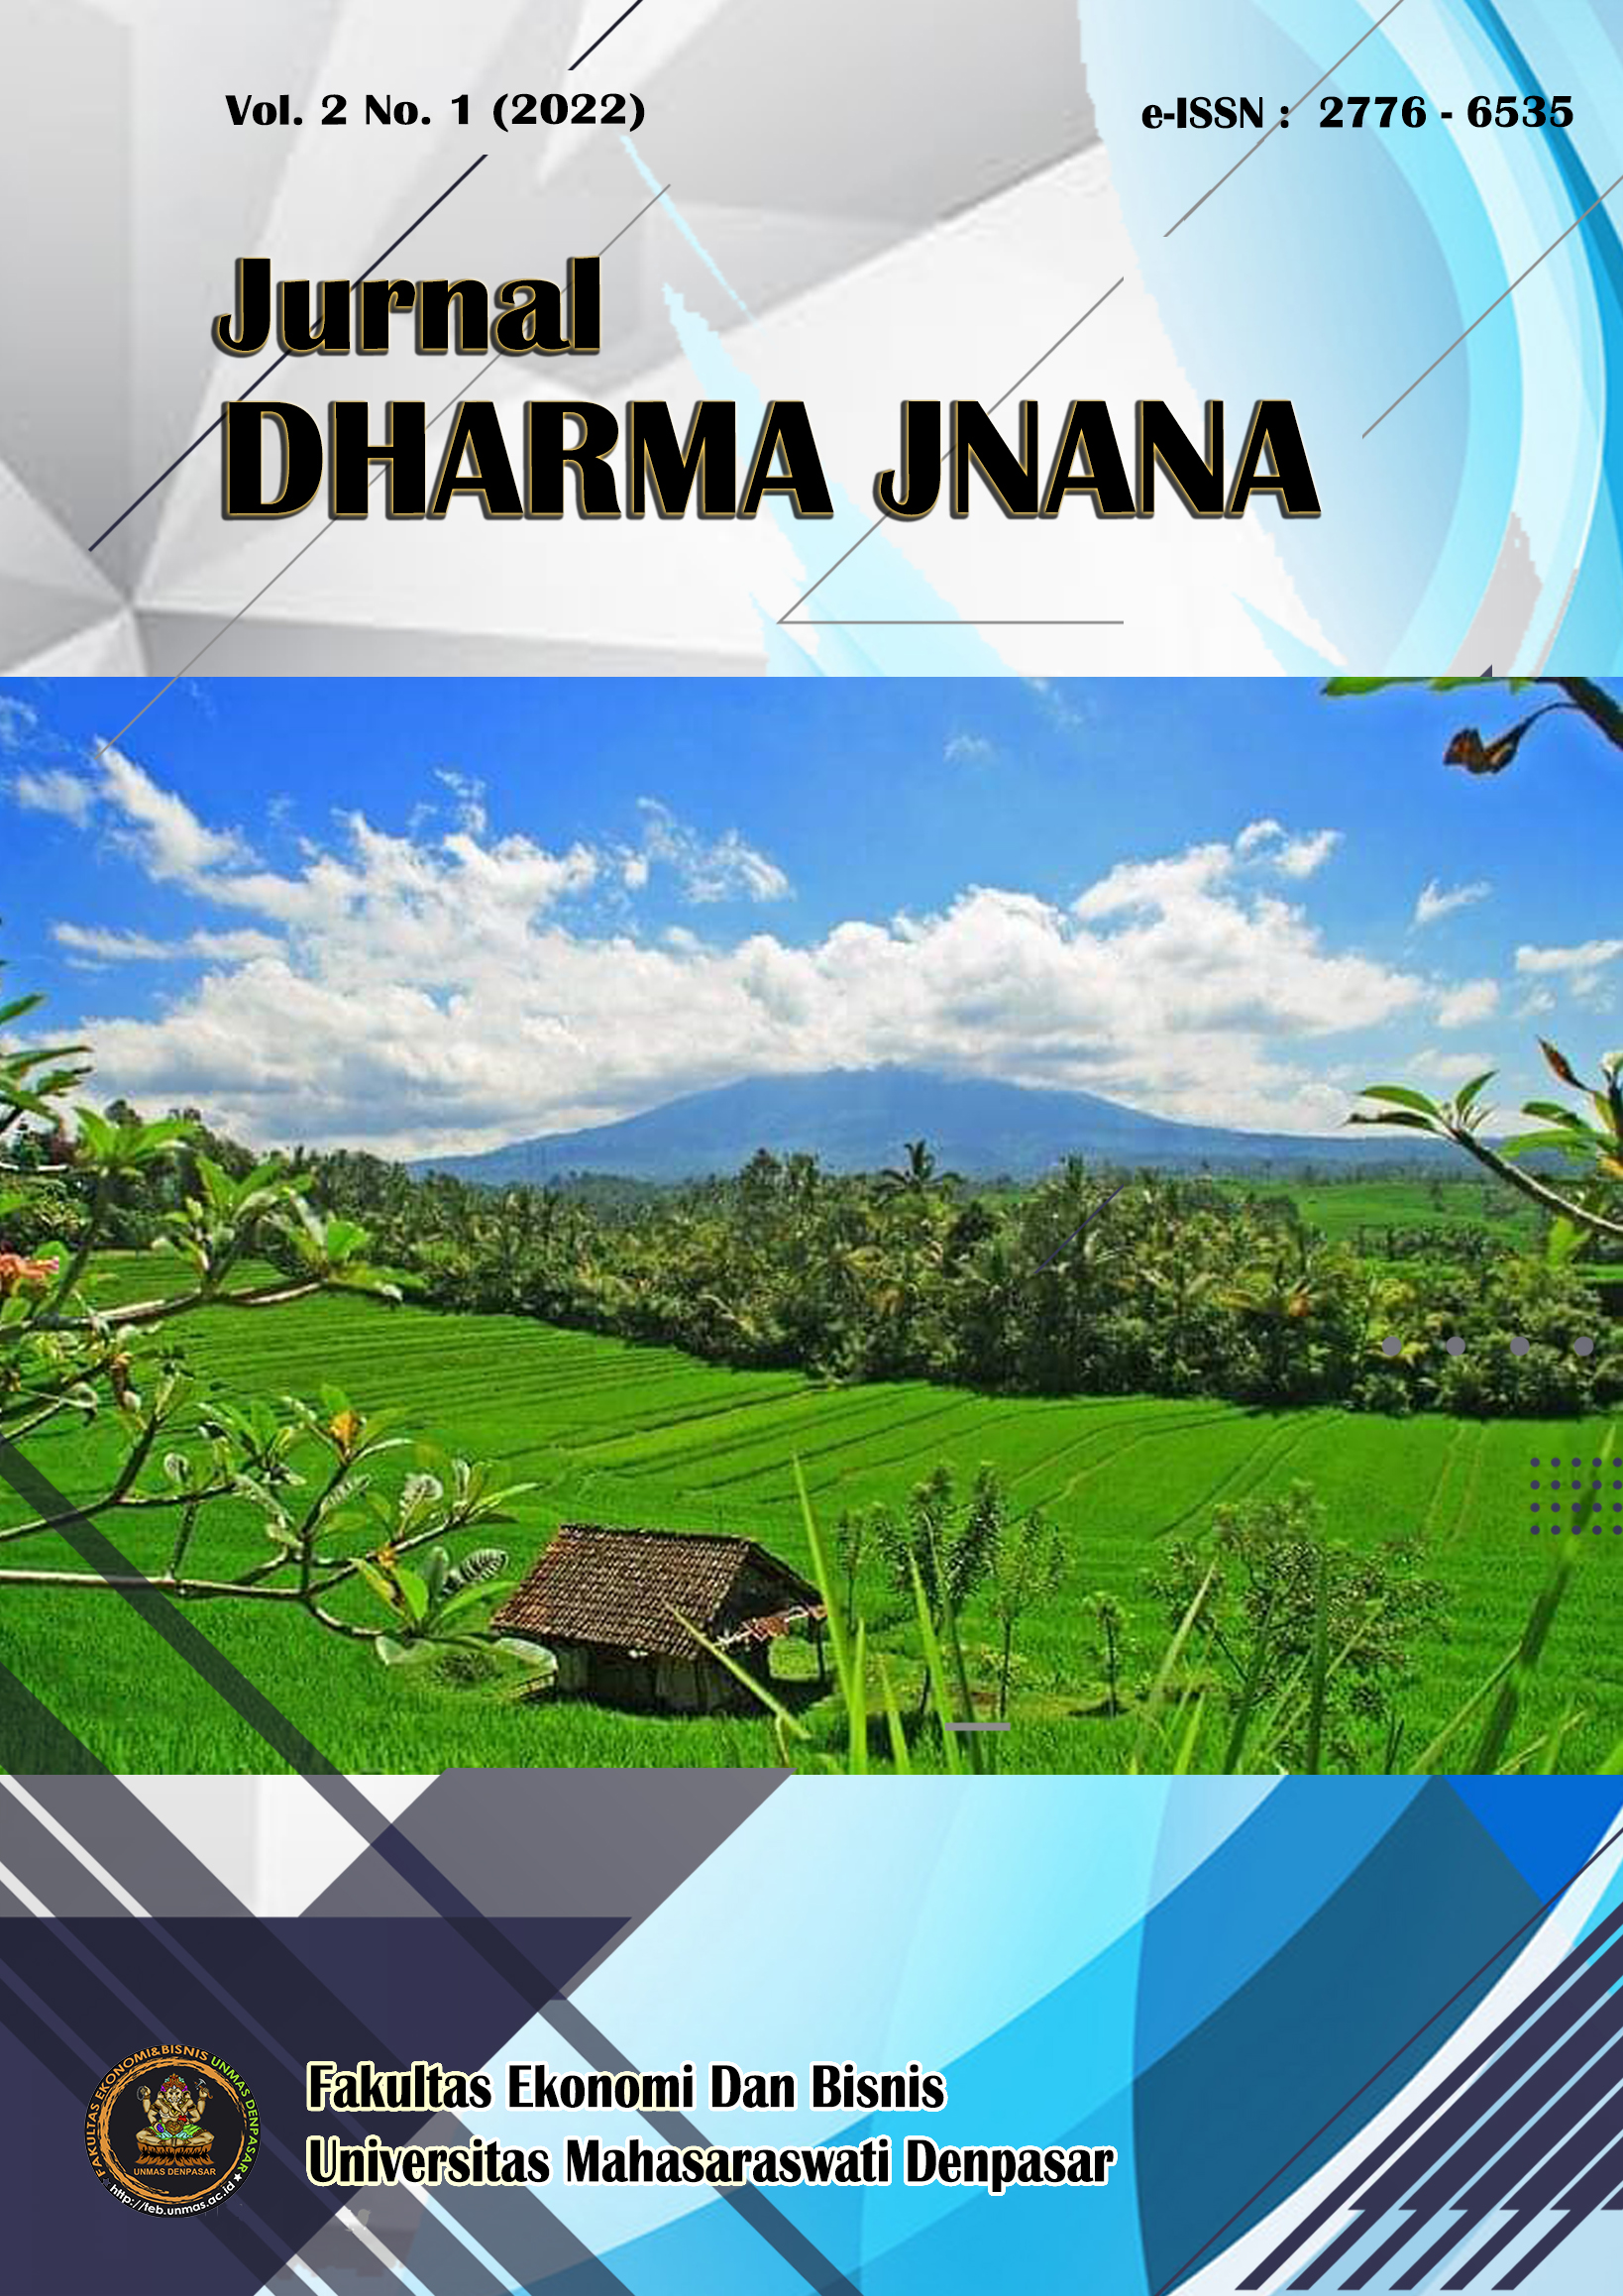 					View Vol. 2 No. 1 (2022): JURNAL DHARMA JNANA
				